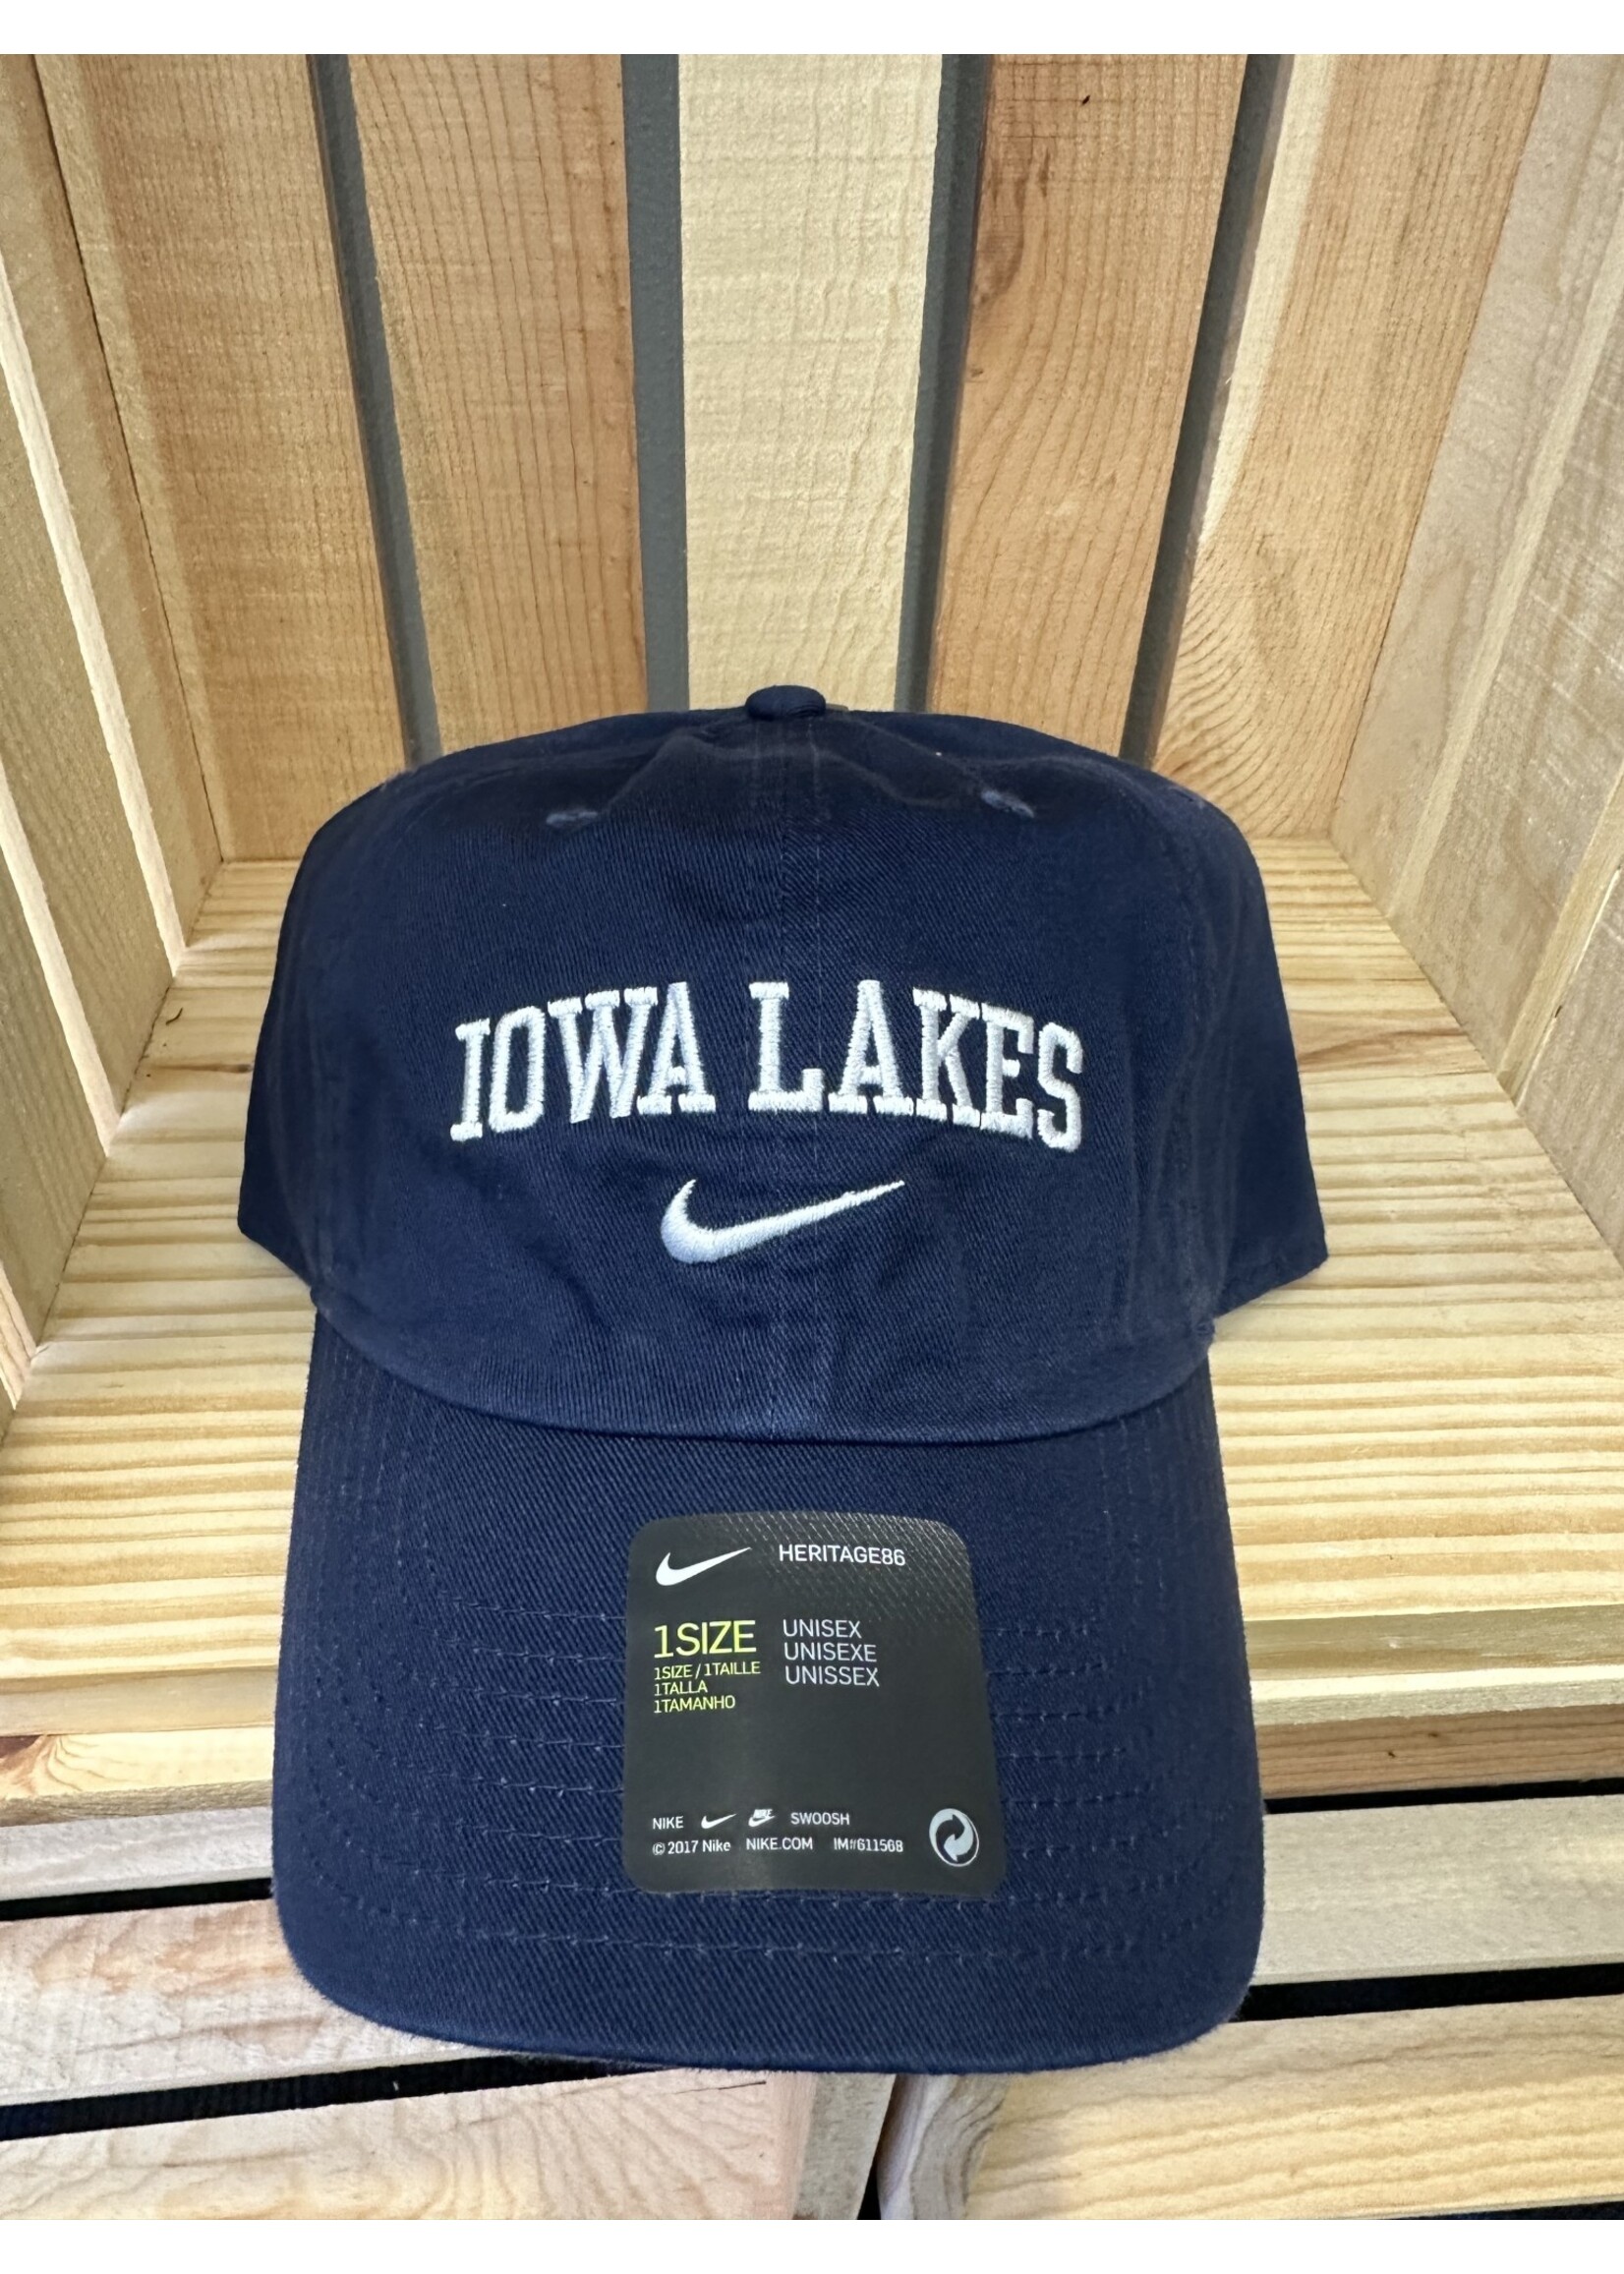 Nike Men's Campus Iowa Lakes Nike Cap - Navy